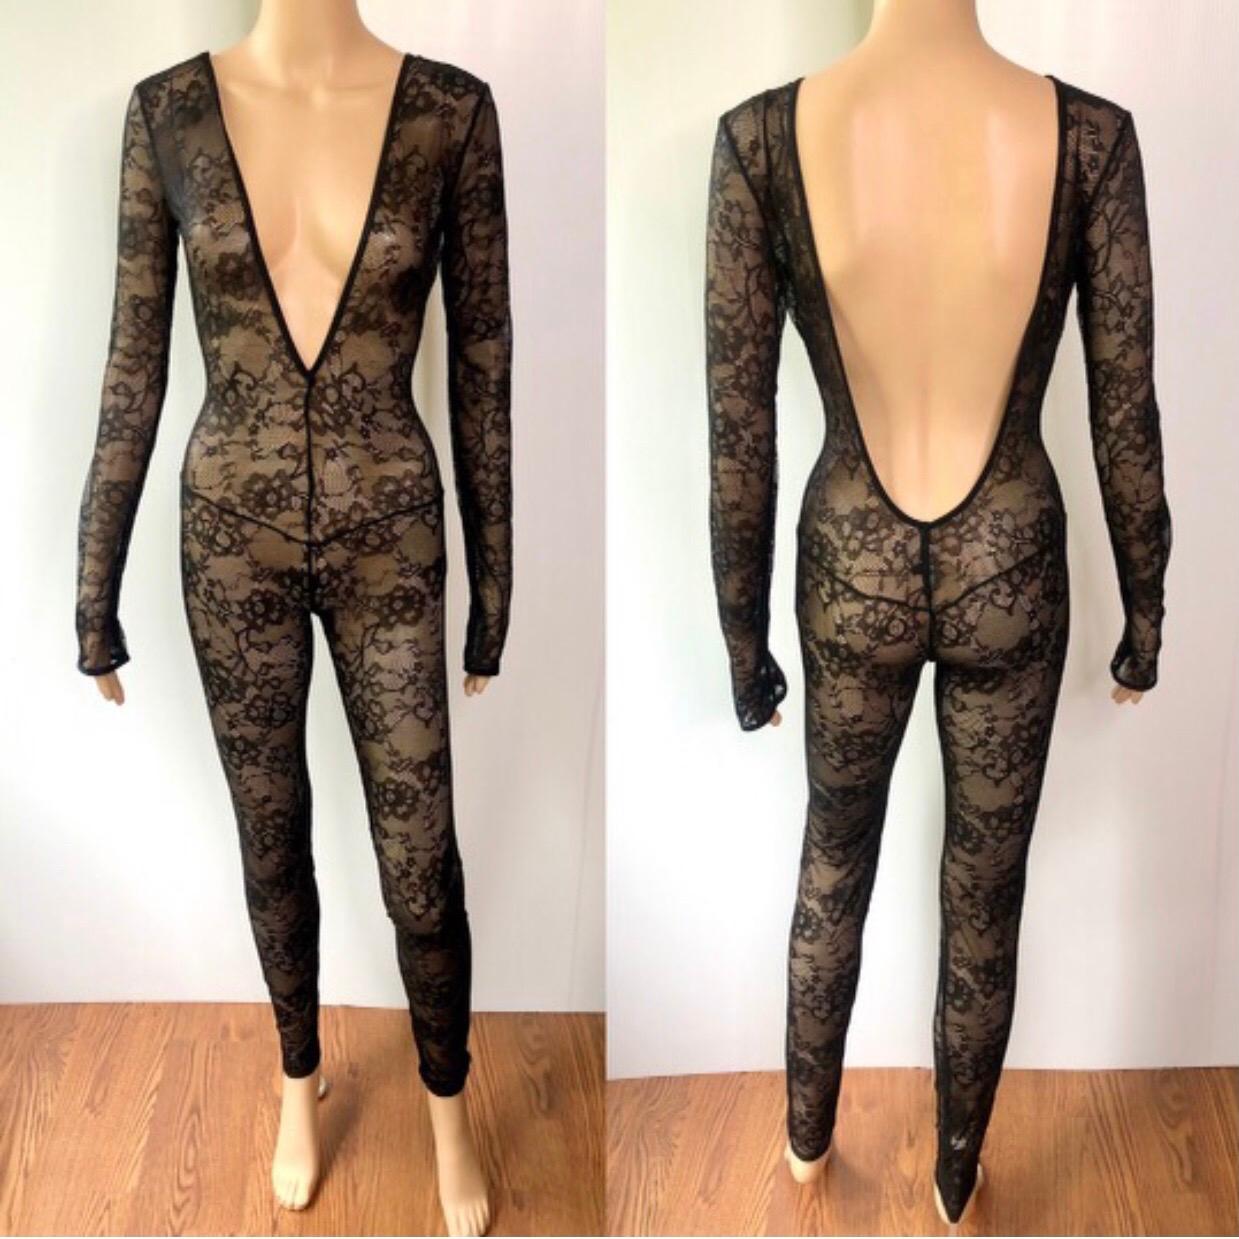 Gucci Plunging Neckline Open Back Sheer Lace Bodycon Black Playsuit Jumpsuit Size S

Excellent Condition! 